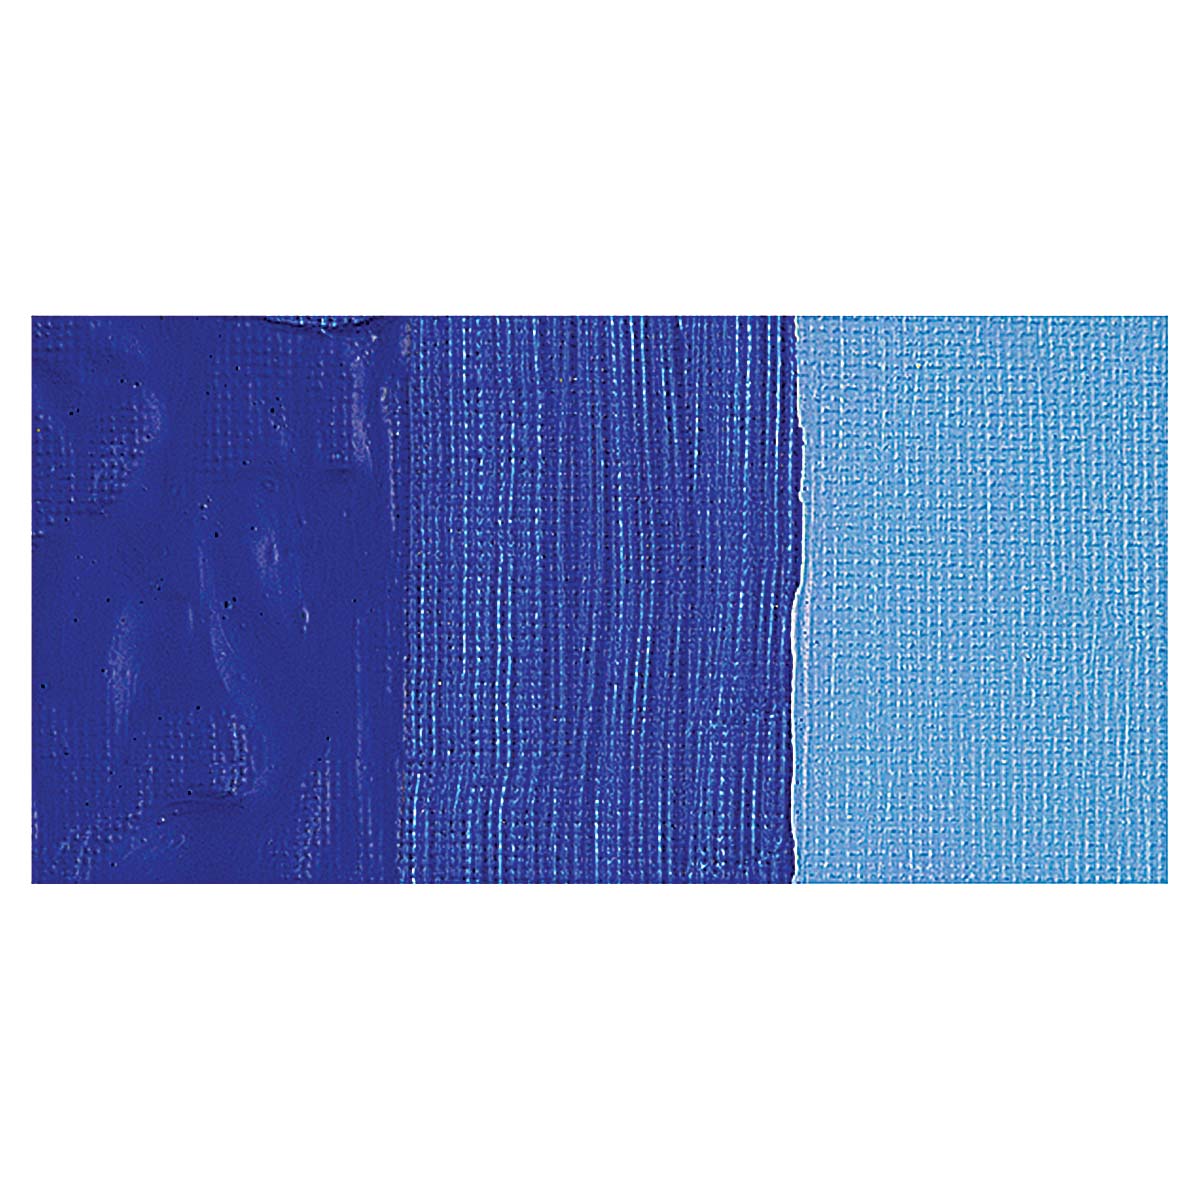 Blick Artists' Acrylic - Cobalt Blue, 2 oz tube